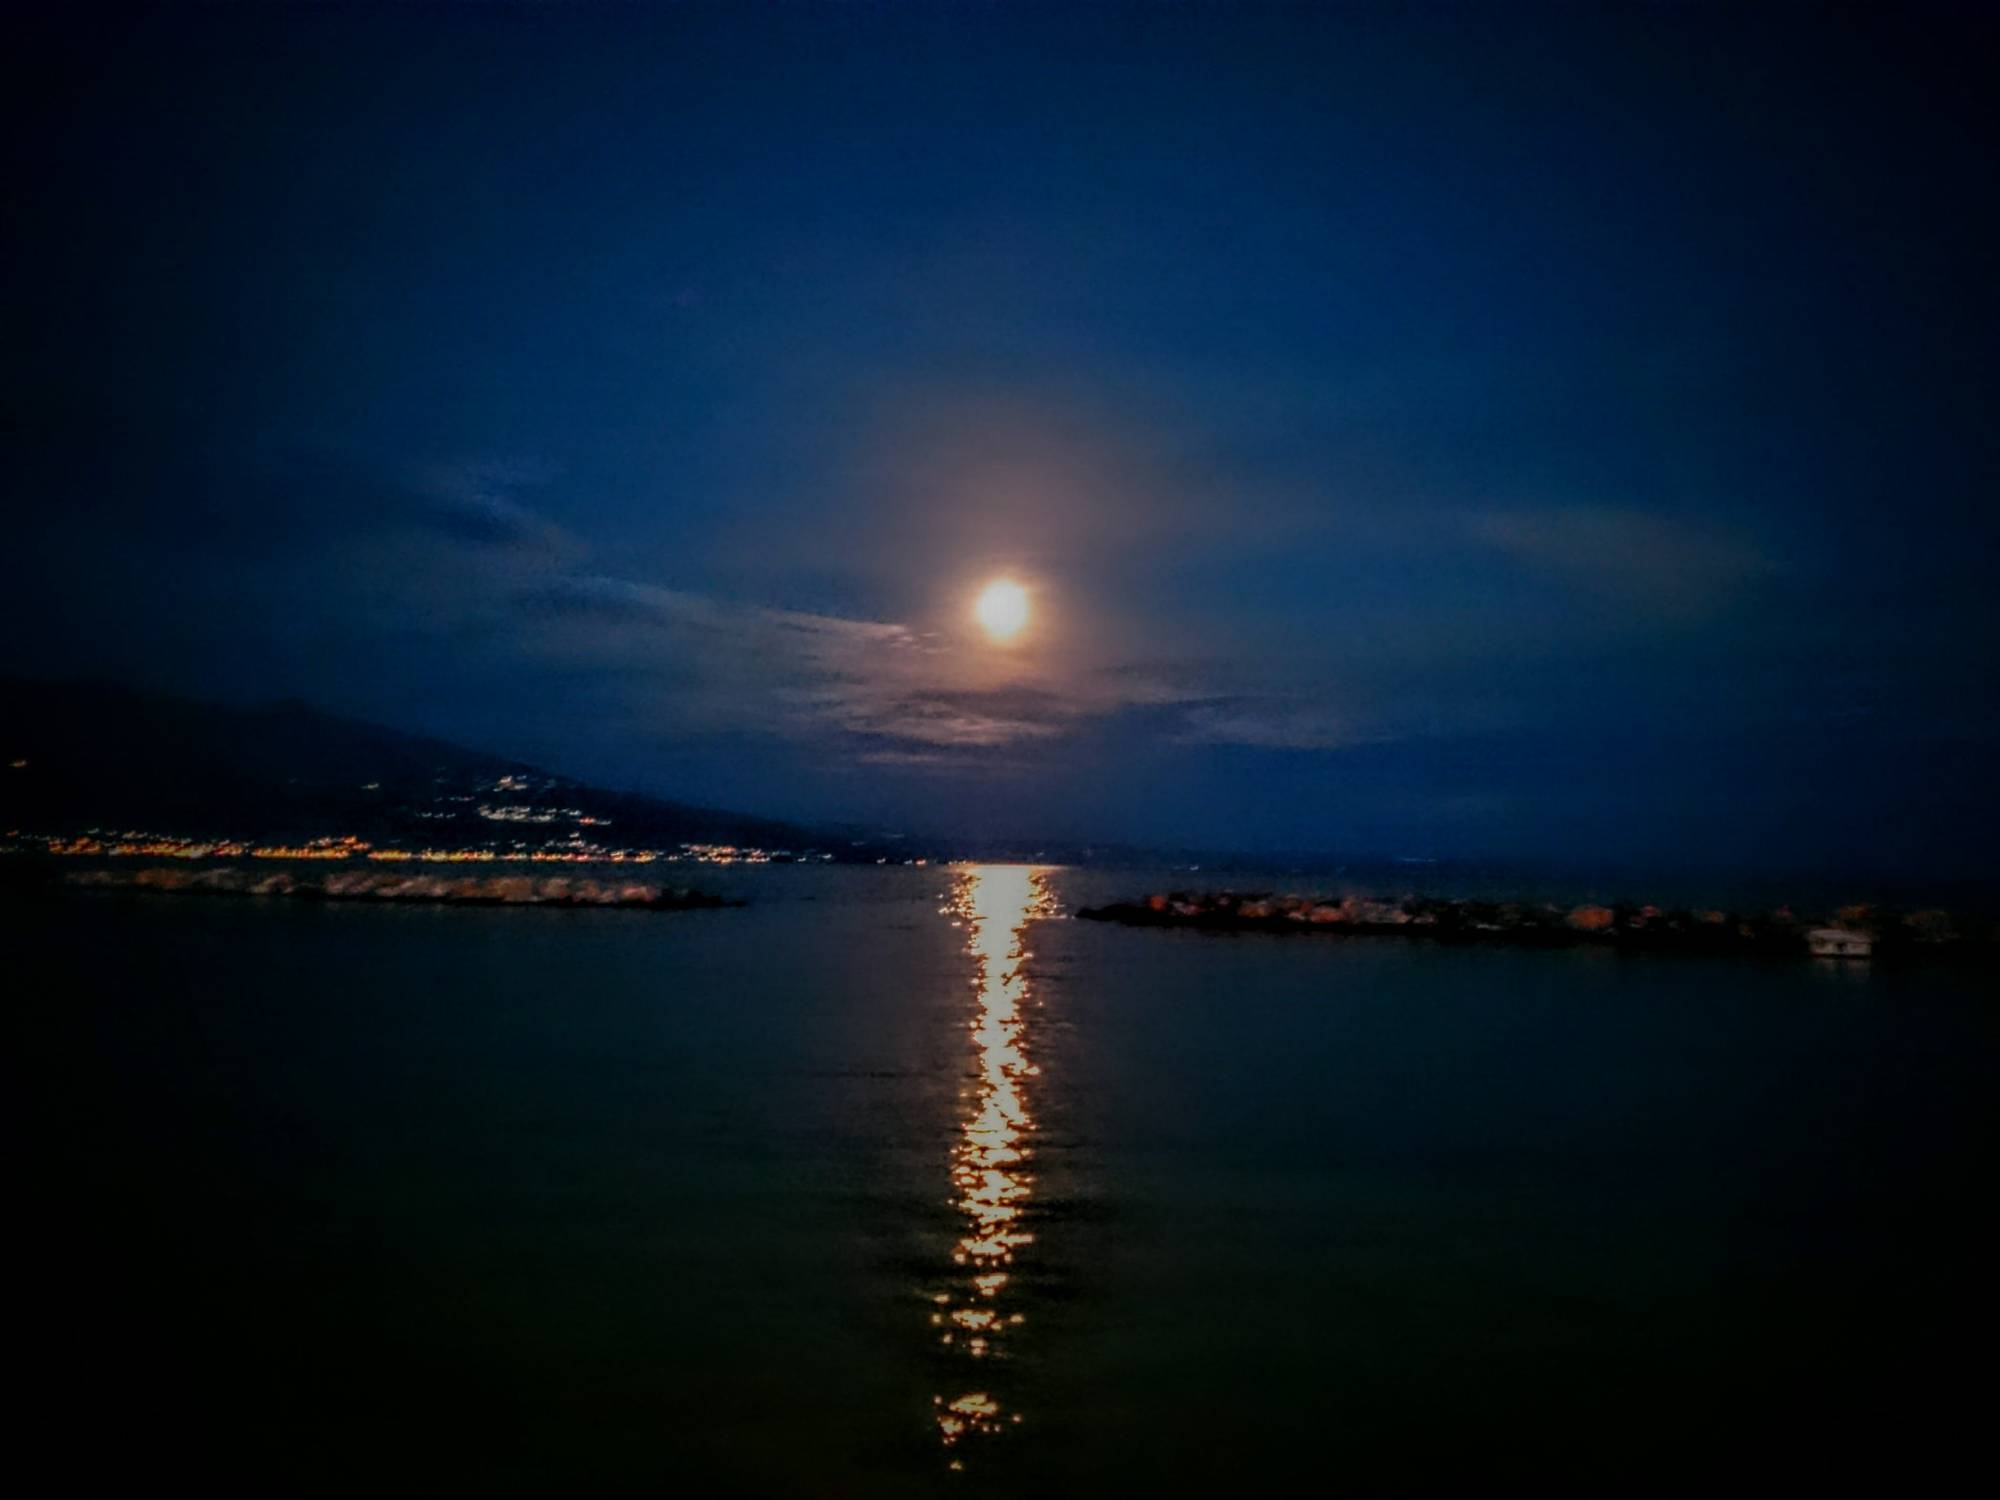 Moon not over bourbon street but over the mediterrean sea